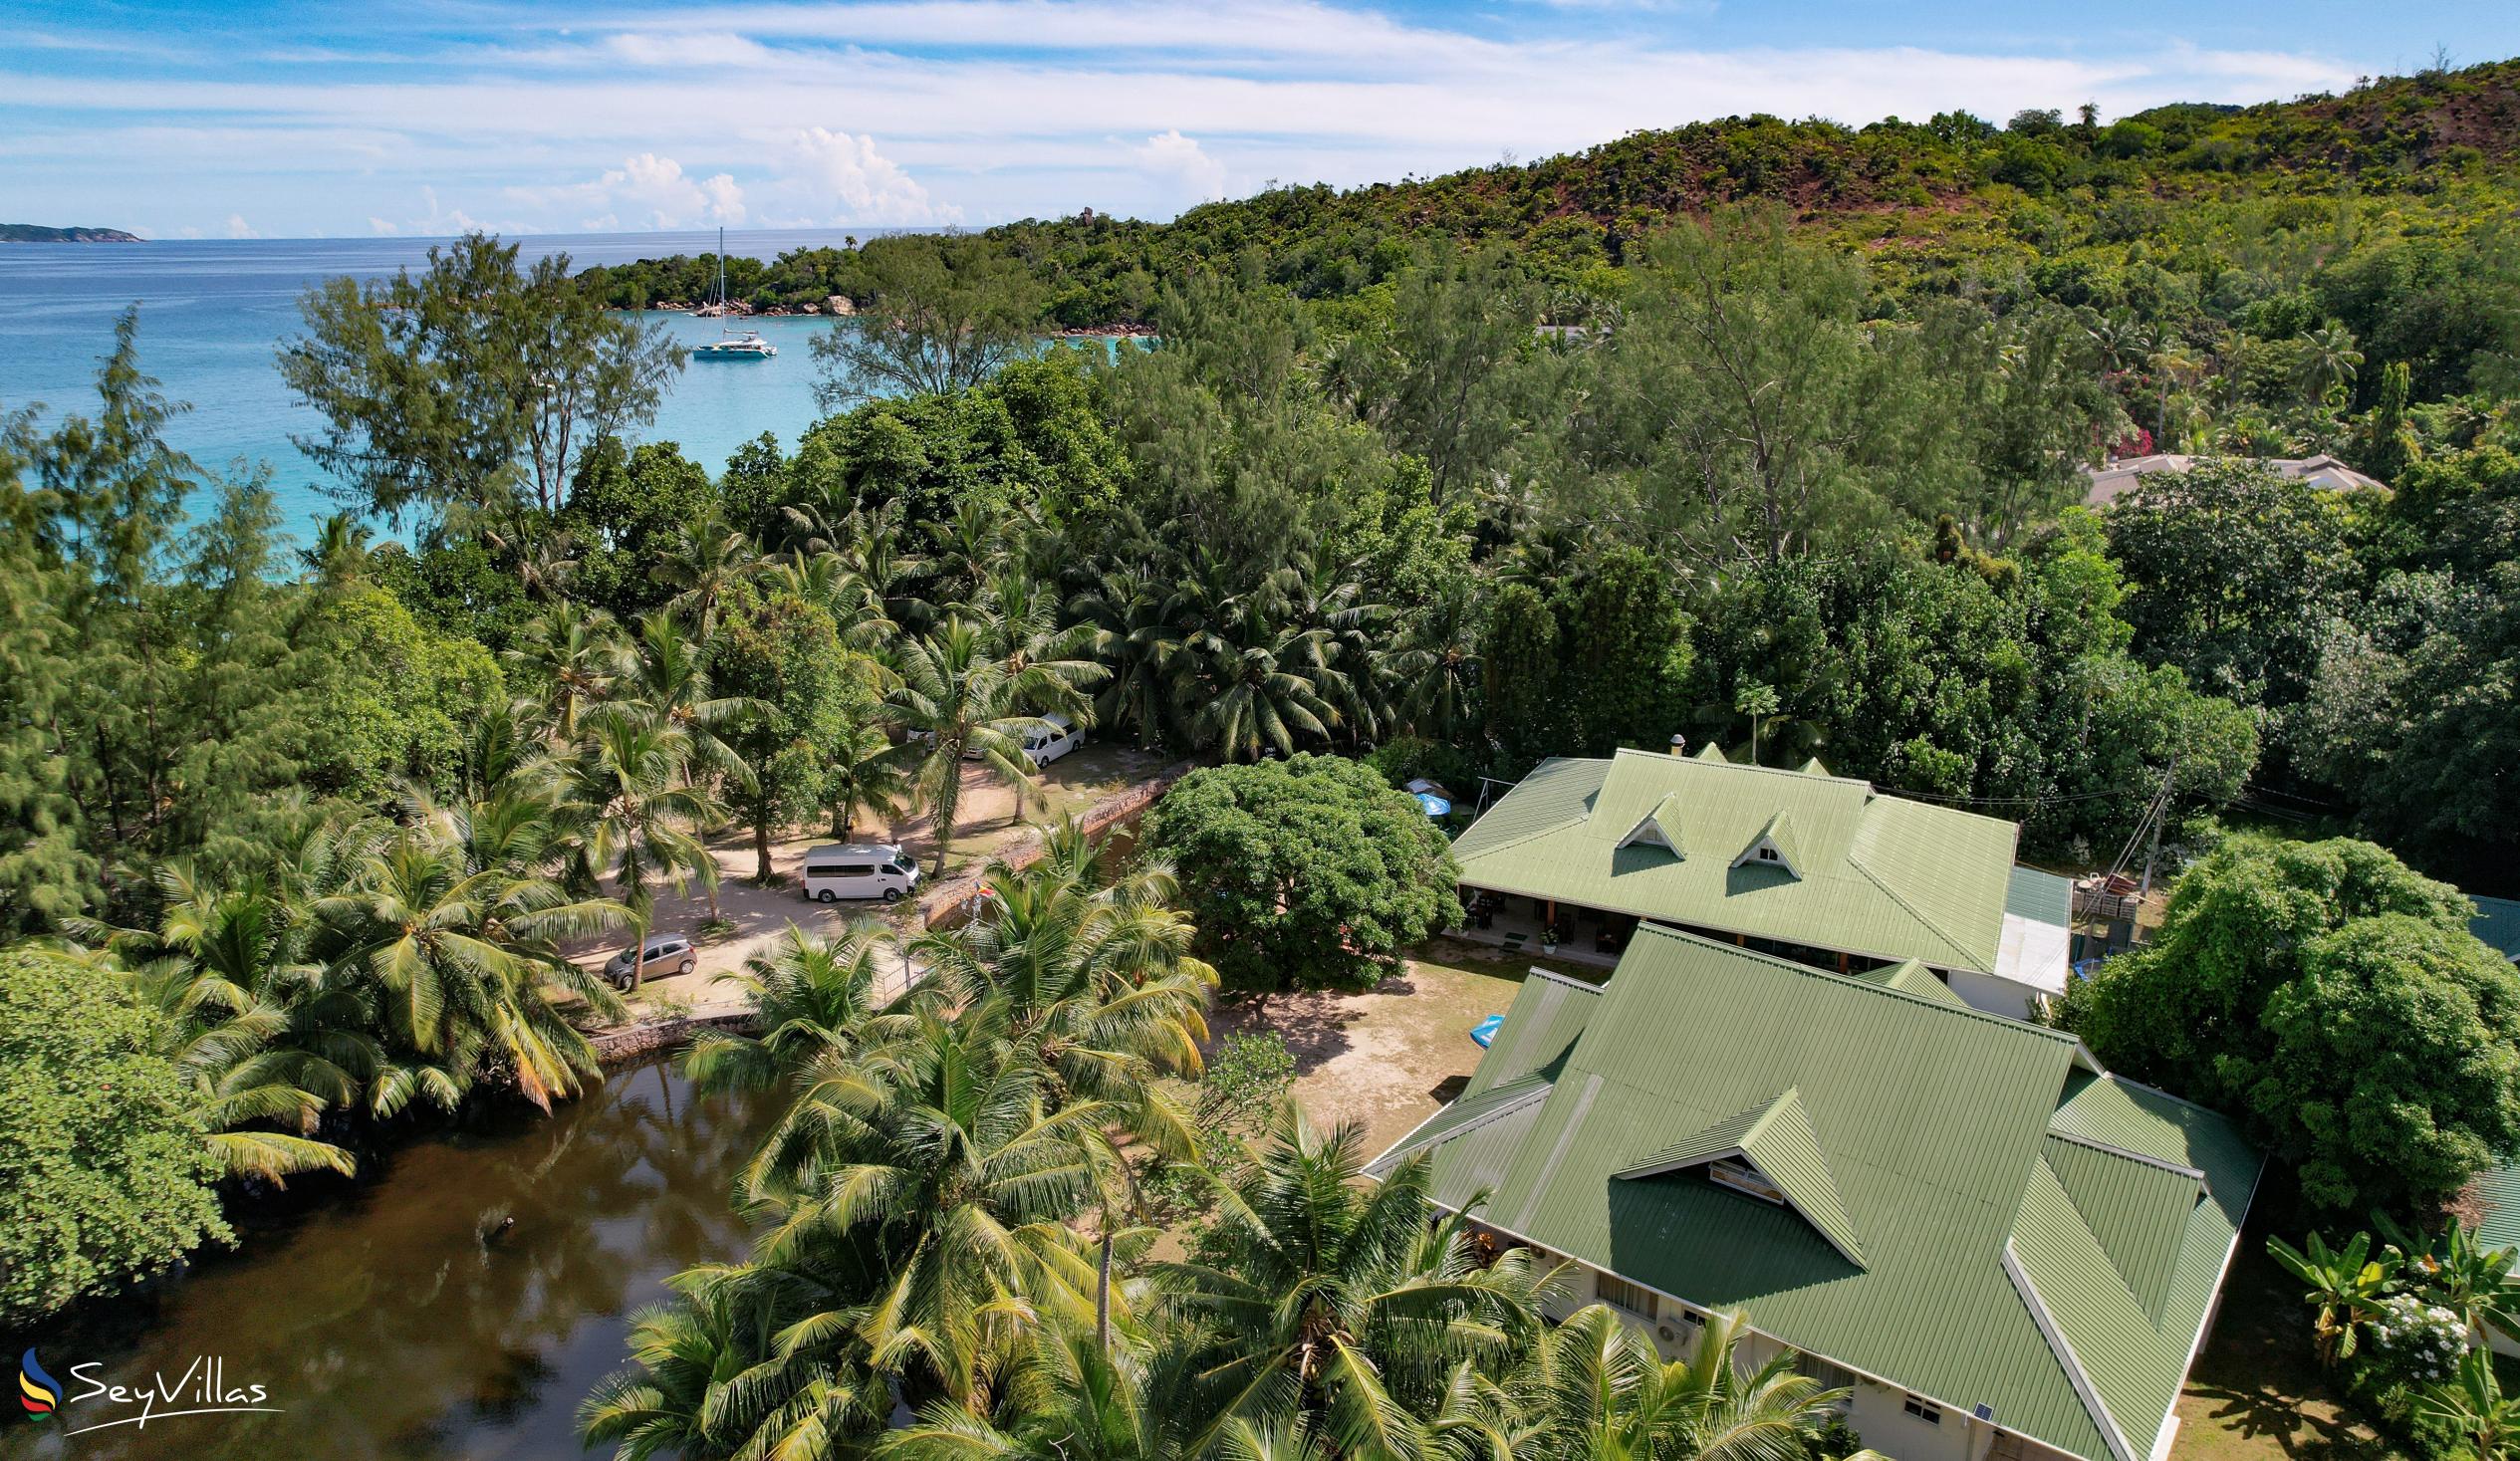 Photo 3: Le Chevalier Bay Guesthouse - Outdoor area - Praslin (Seychelles)